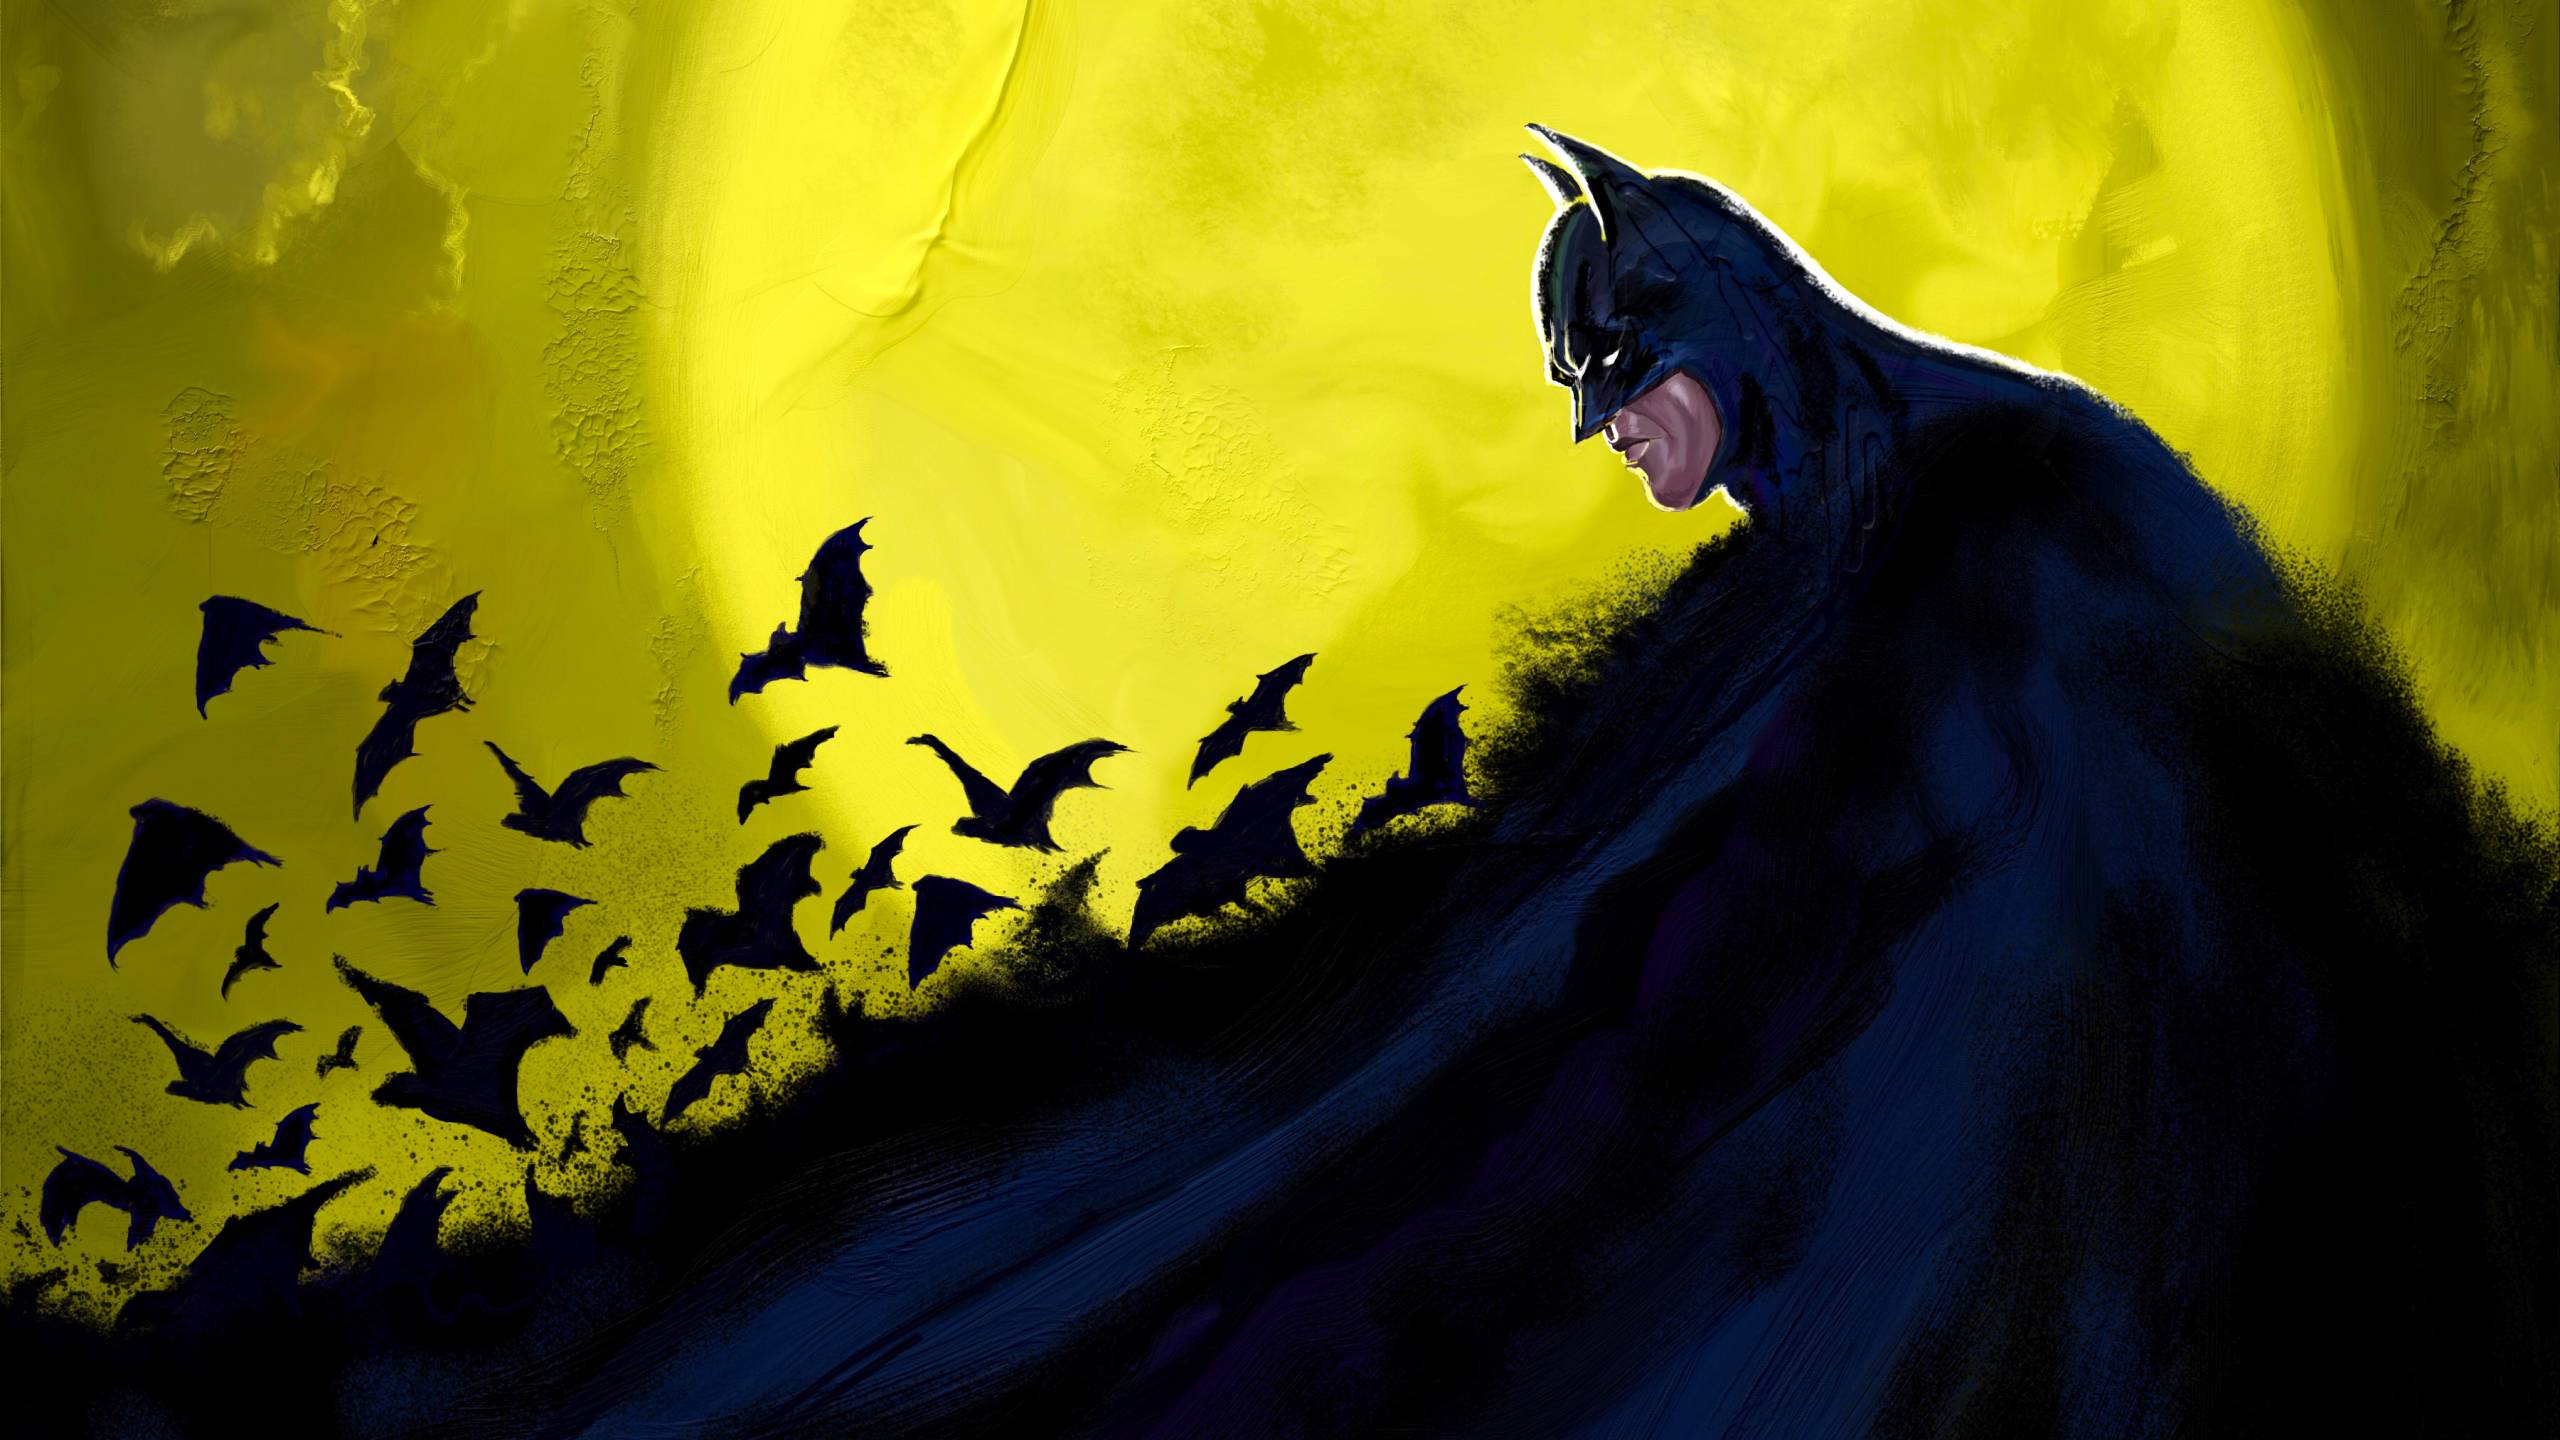 Batman Yellow Wallpapers - Top Free Batman Yellow Backgrounds ...